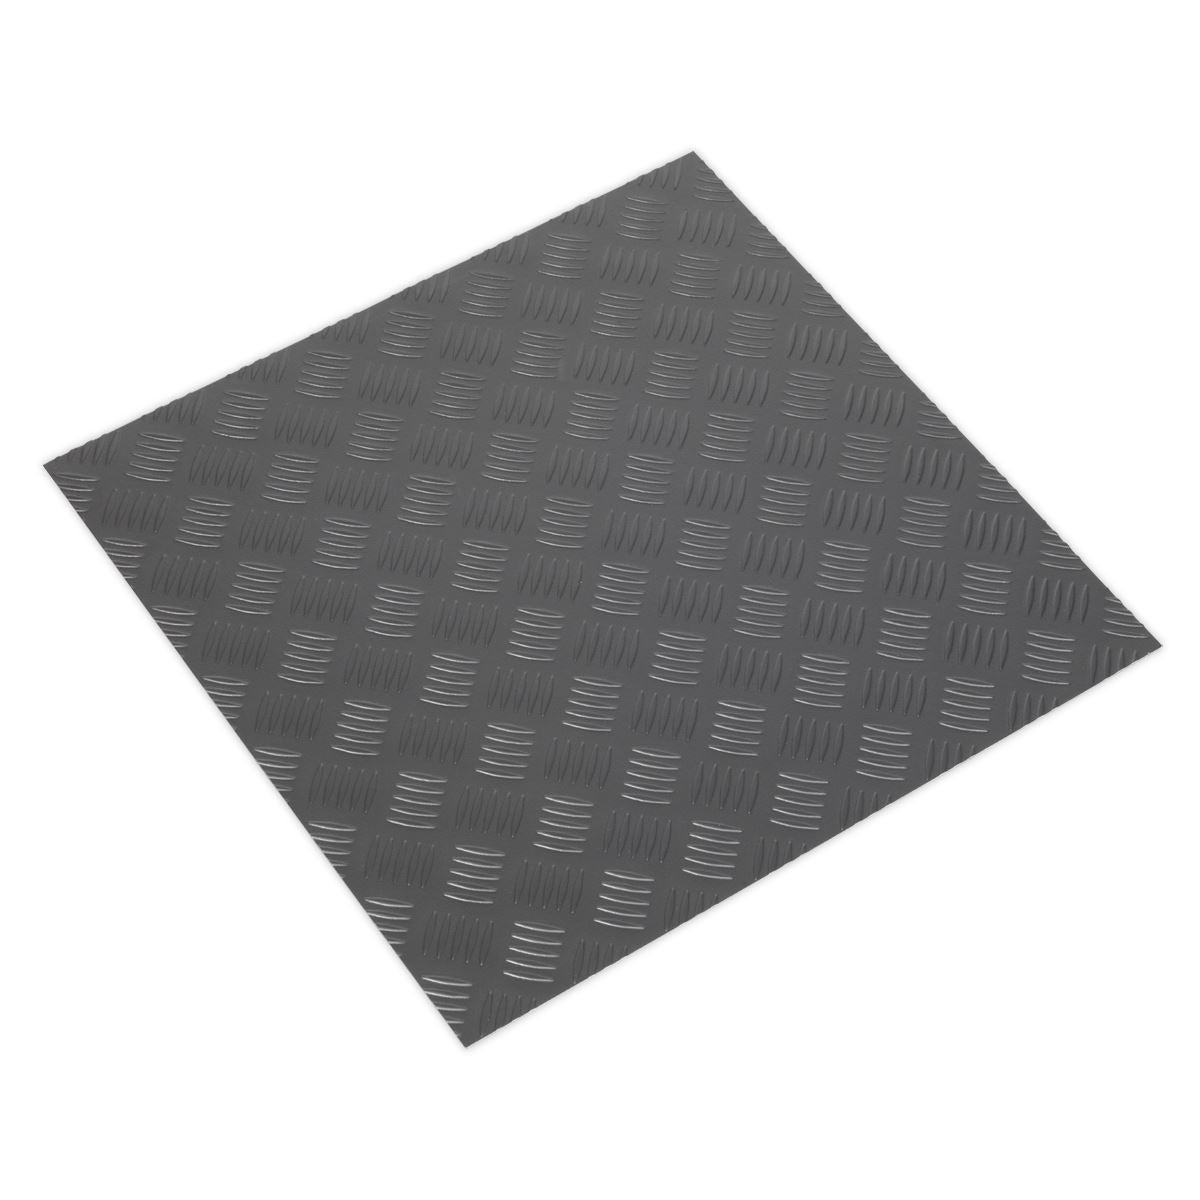 Sealey Vinyl Floor Tile with Peel & Stick Backing - Silver Treadplate Pack of 16